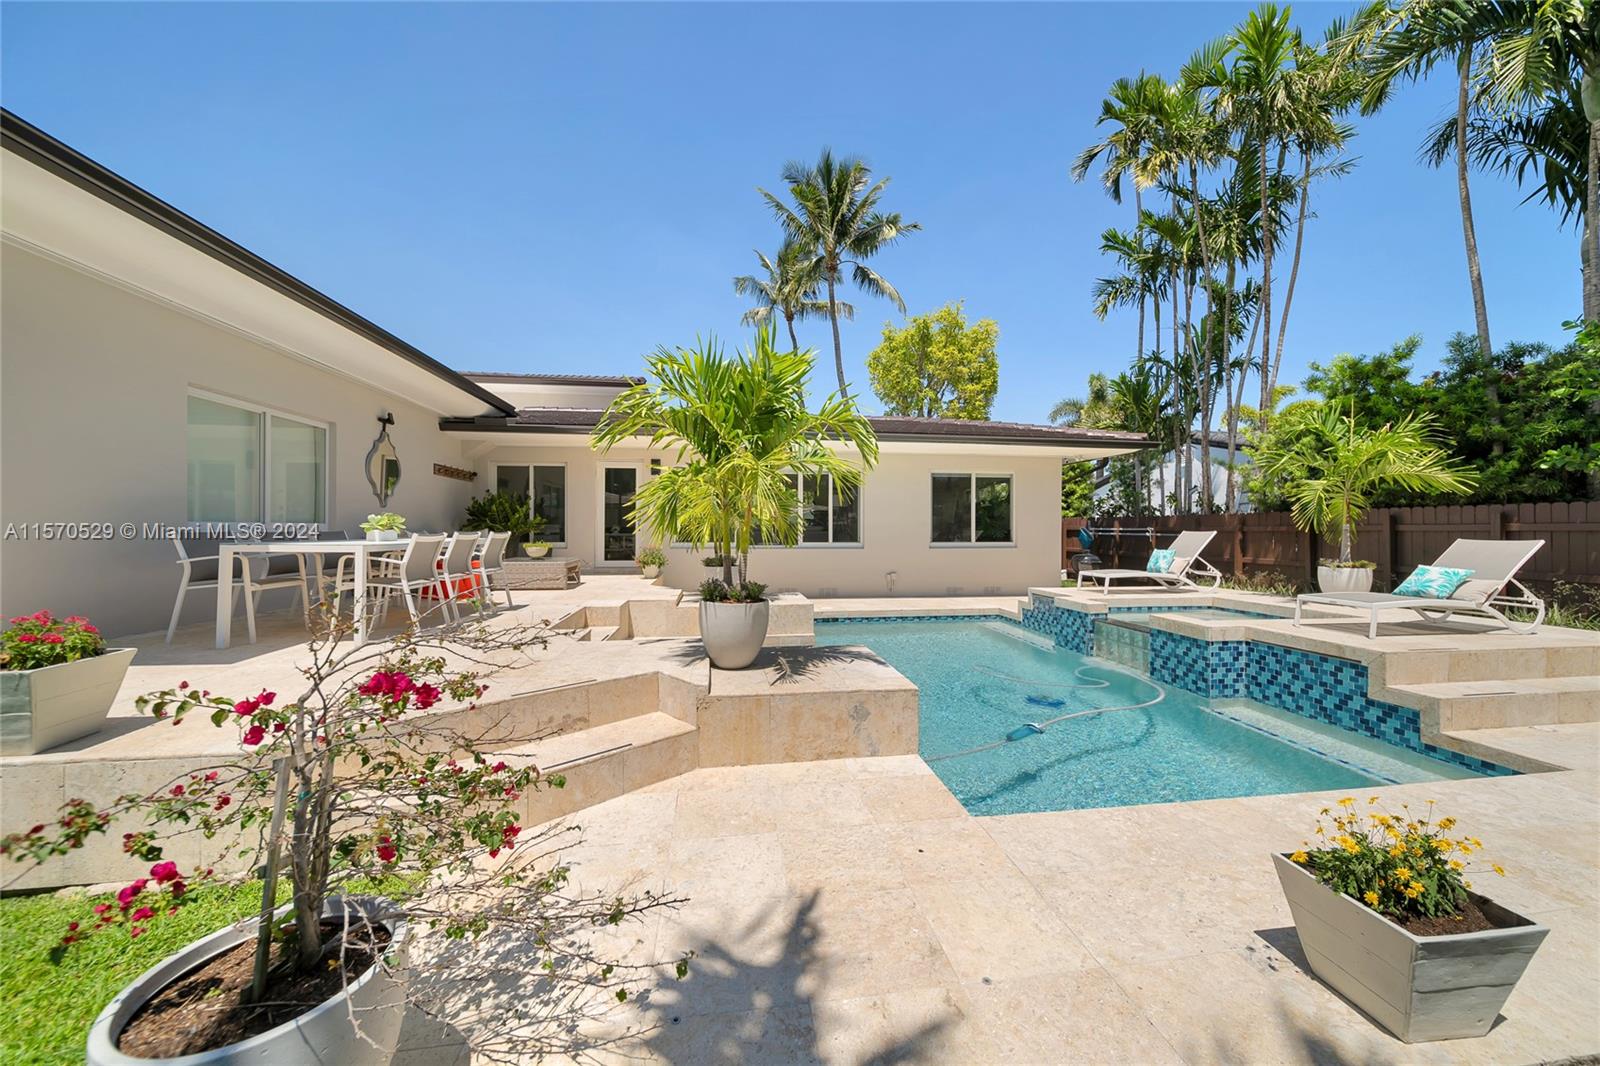 Property for Sale at 1226 Ne 100th St, Miami Shores, Miami-Dade County, Florida - Bedrooms: 3 
Bathrooms: 2  - $2,200,000